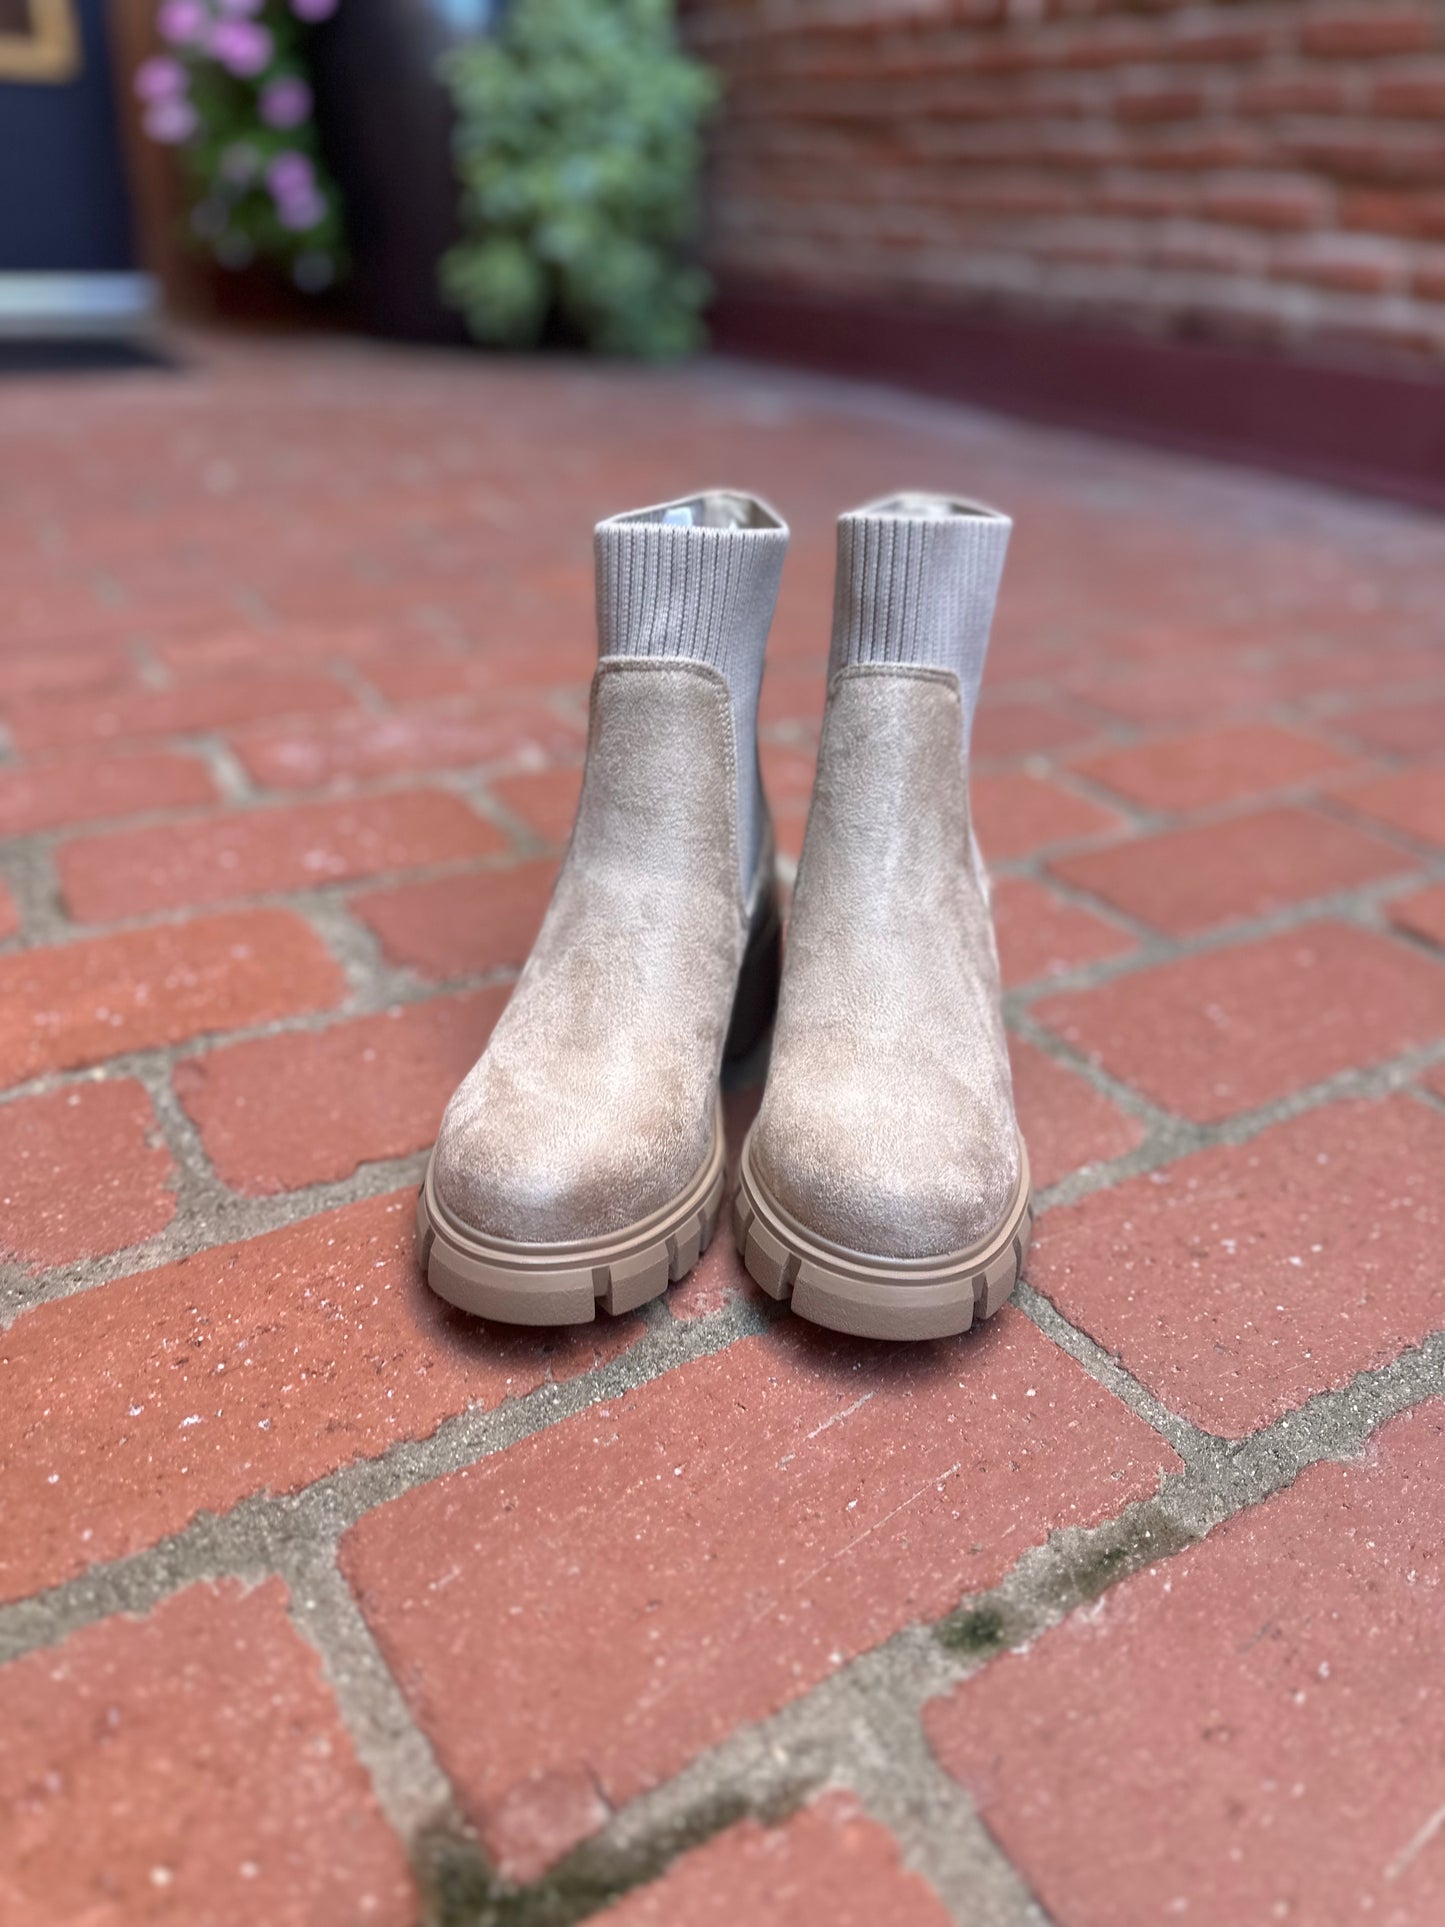 Chelsea Elastic Cuff Slip-On Boots